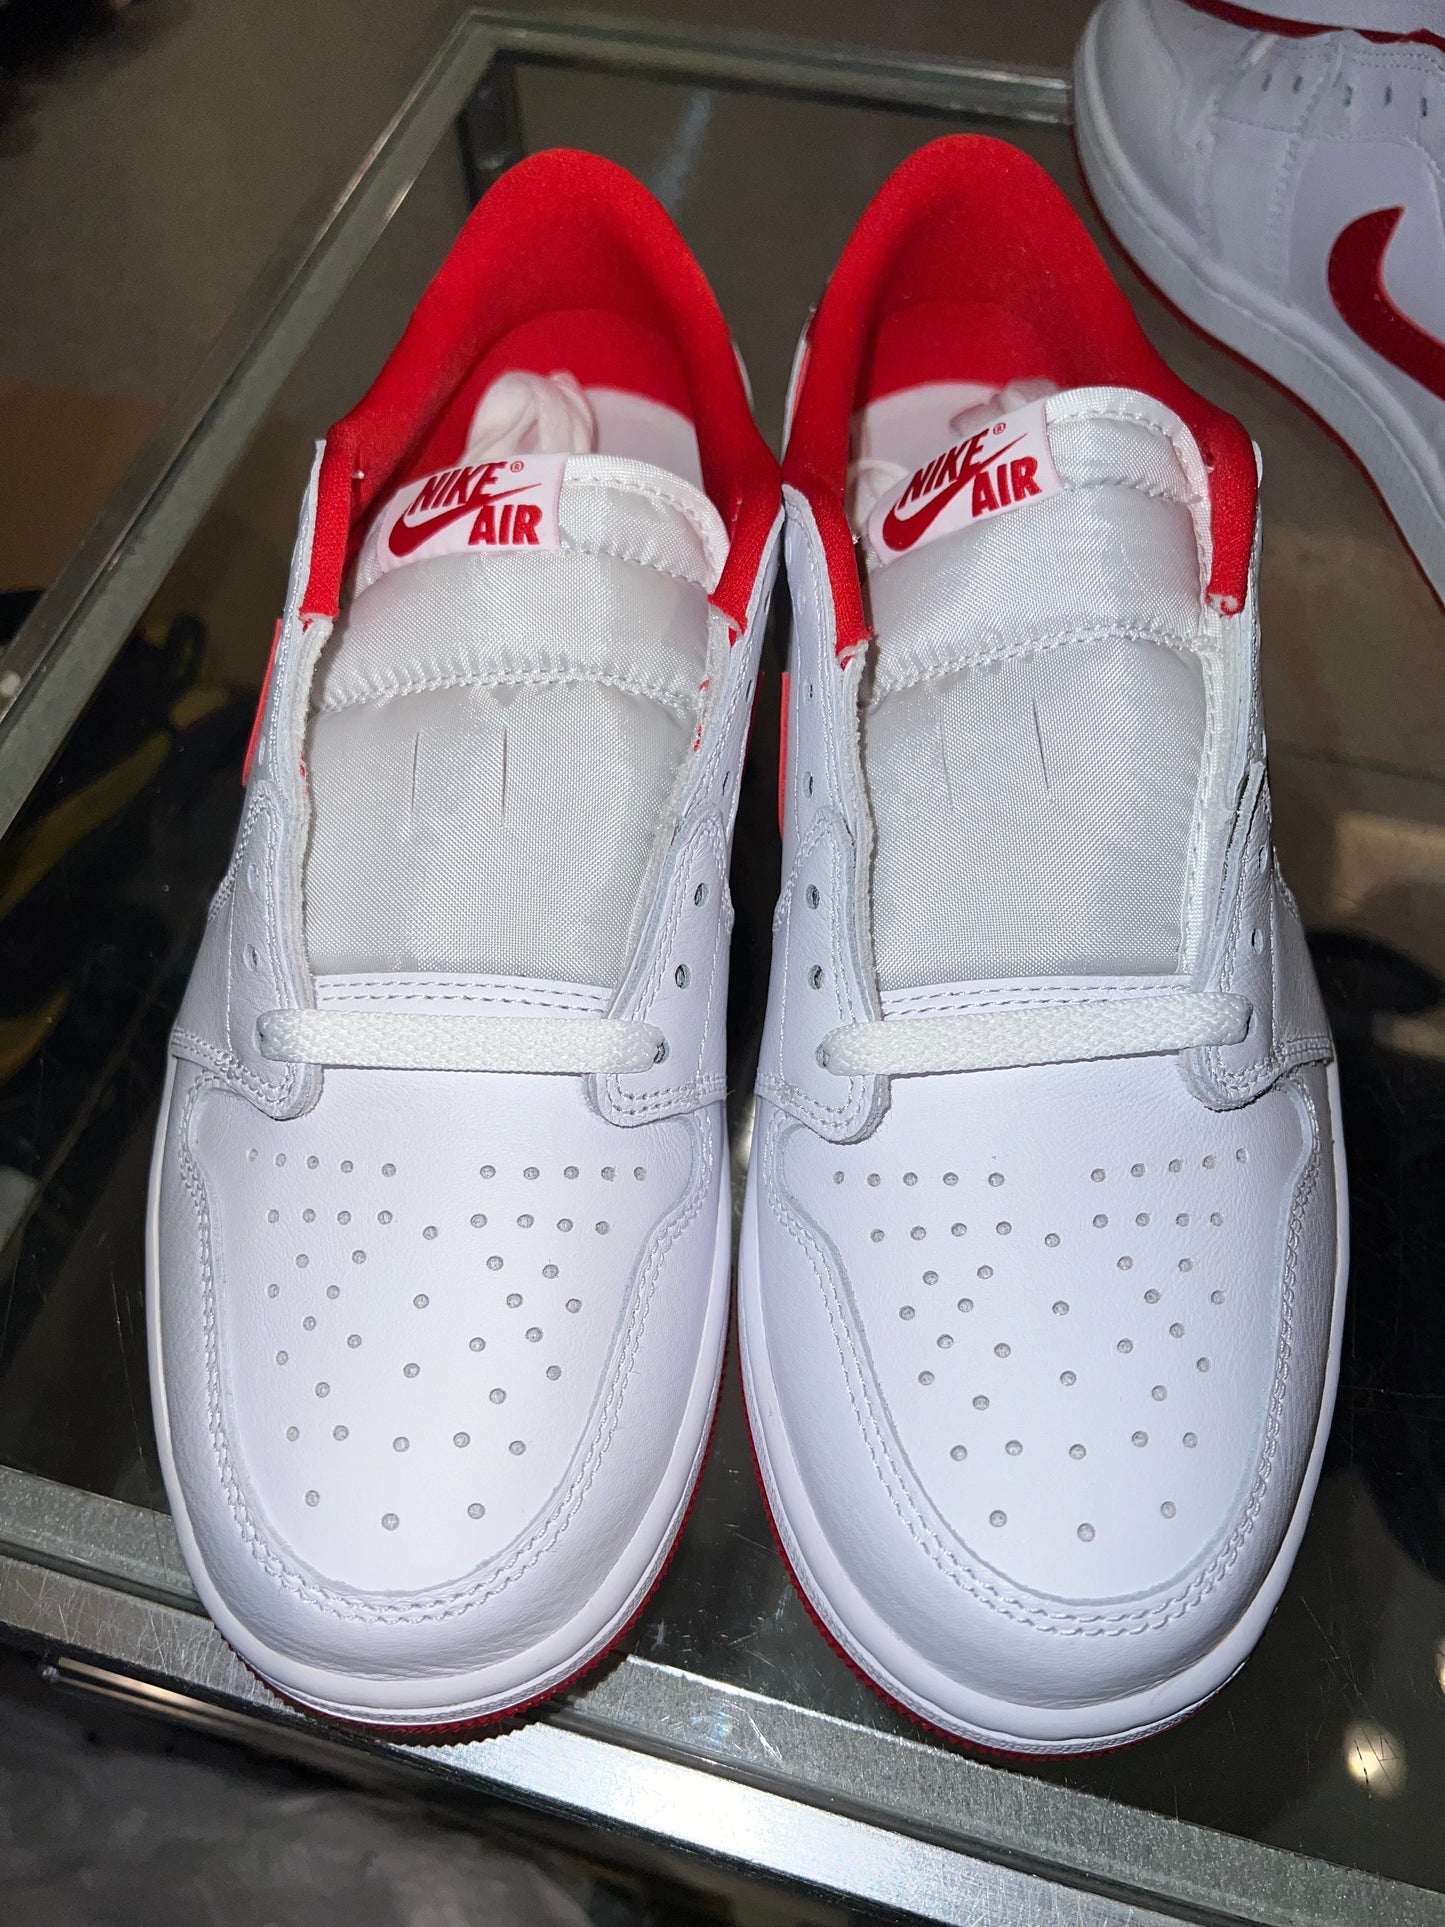 Size 9.5 Air Jordan 1 Low “University Red” Brand New (Mall)